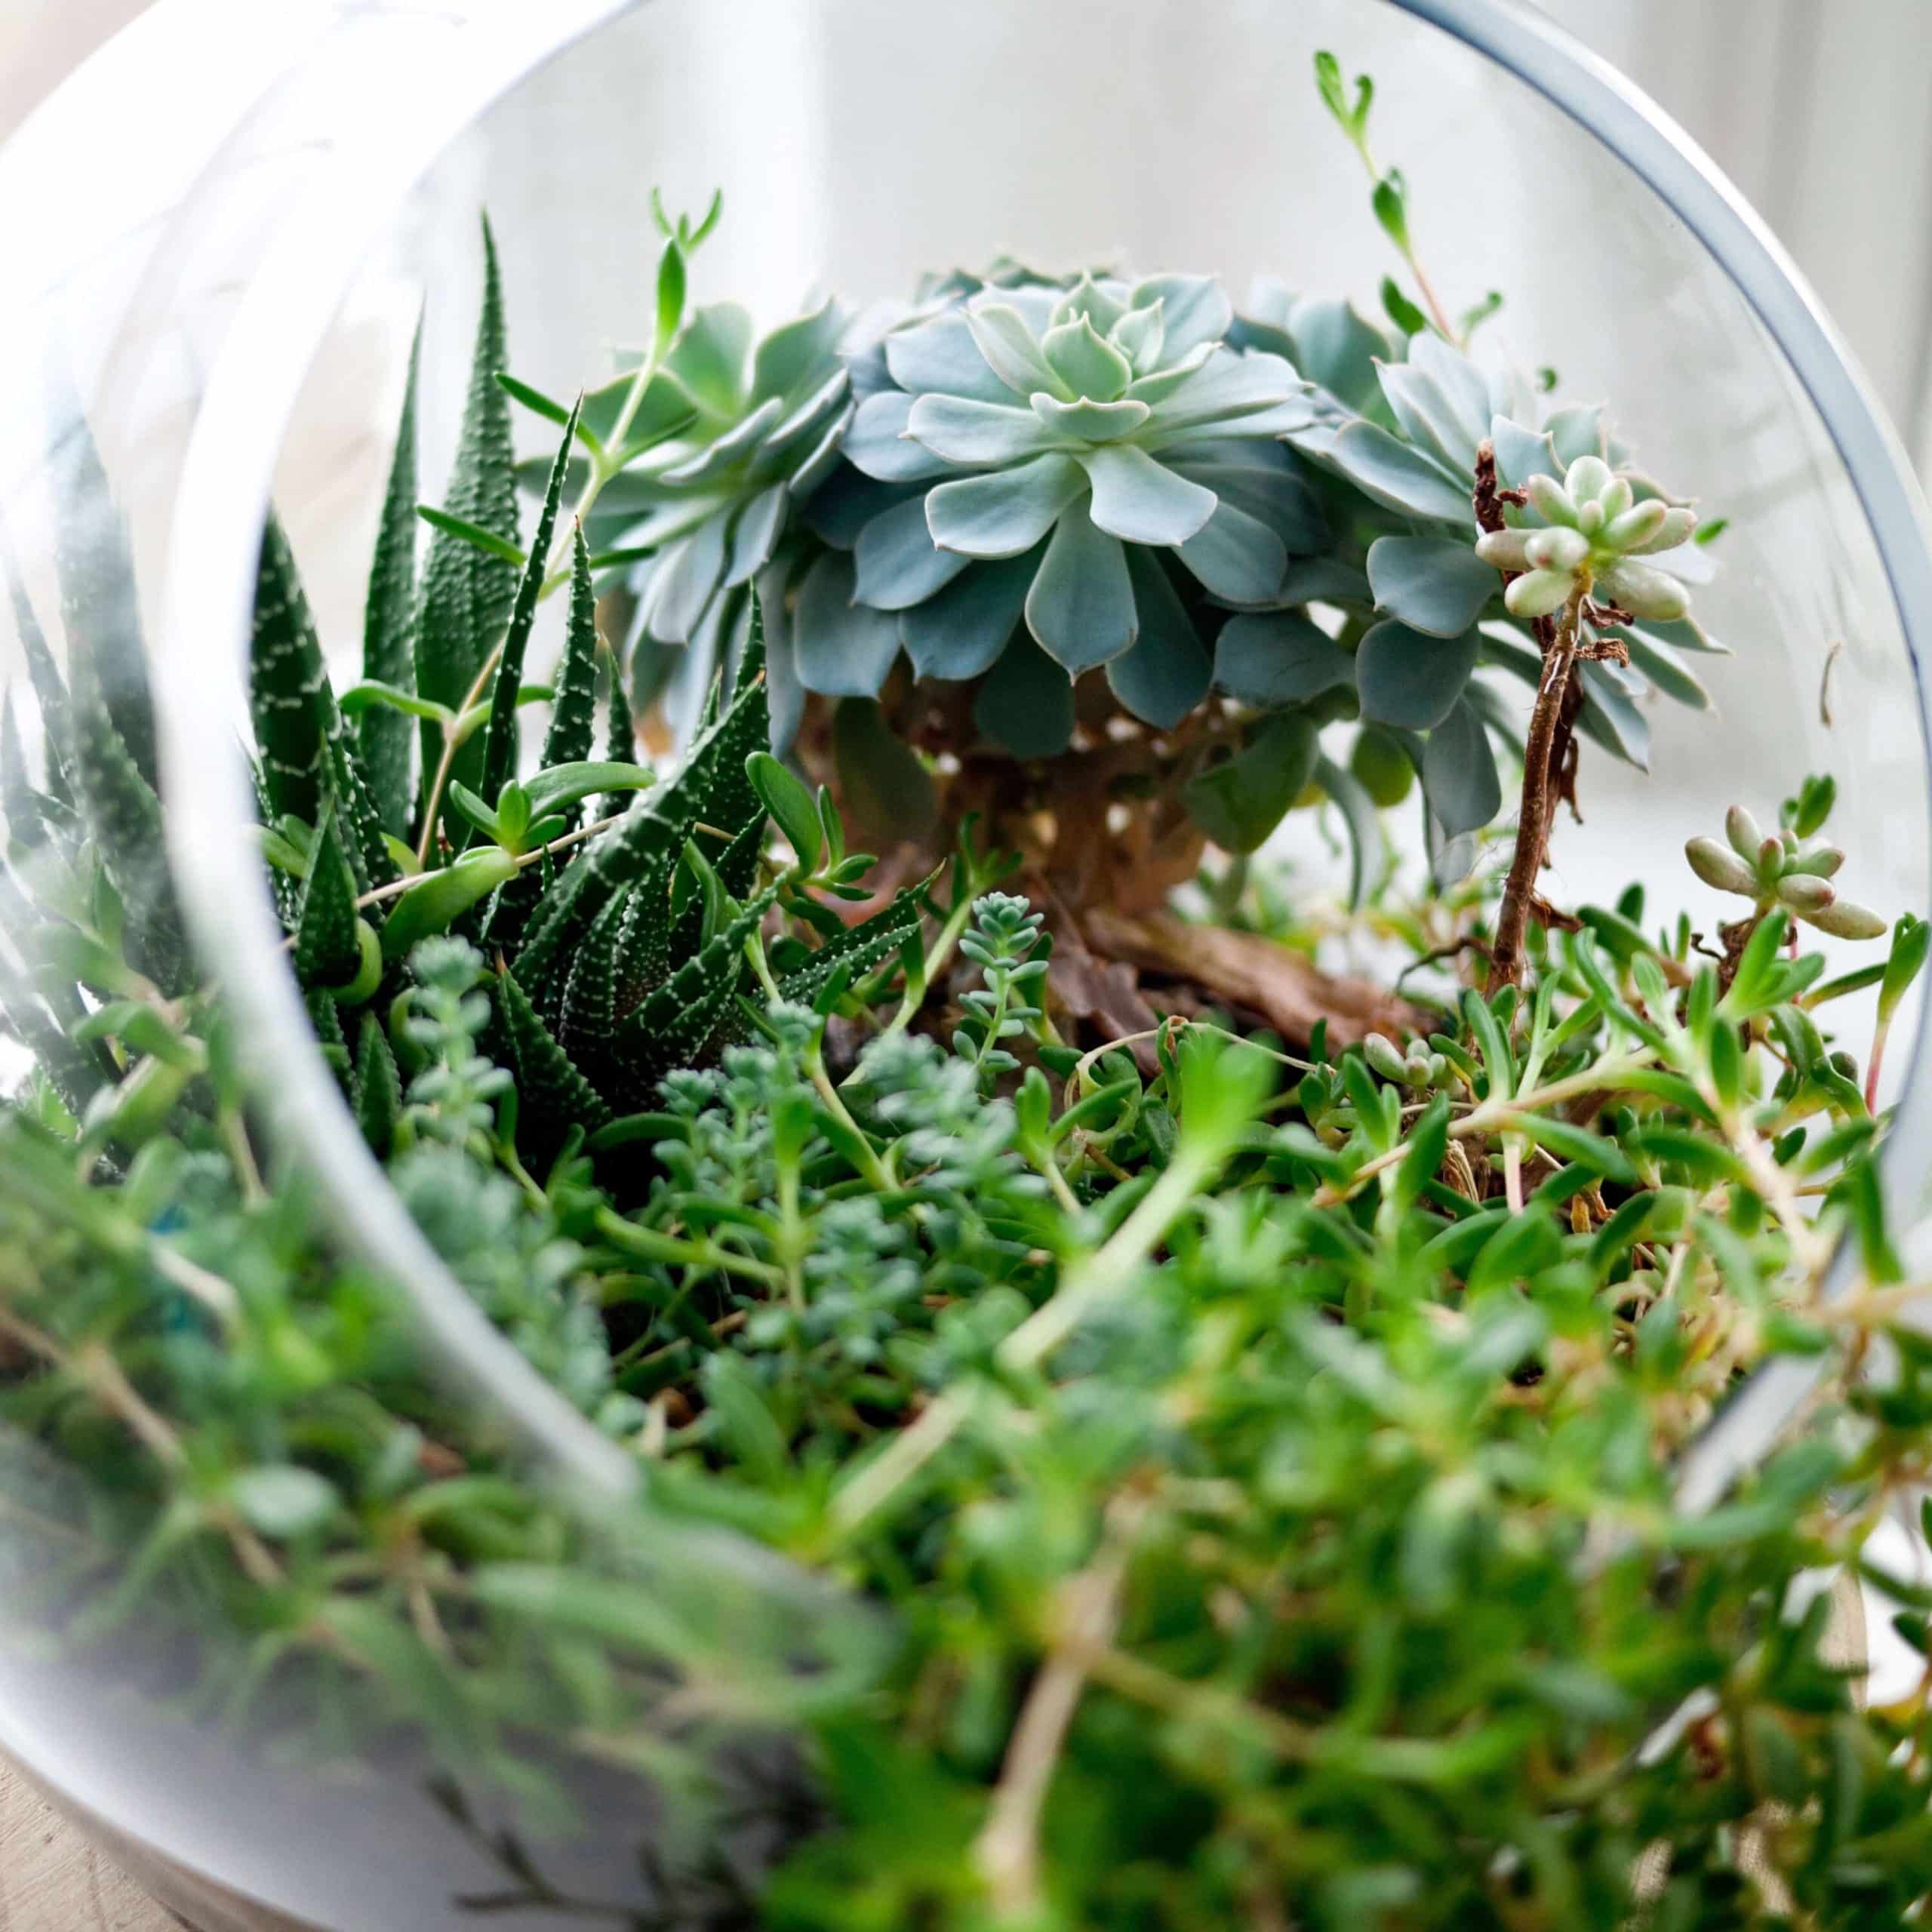 A close-up view of a succulent terrarium featuring lush green plants.